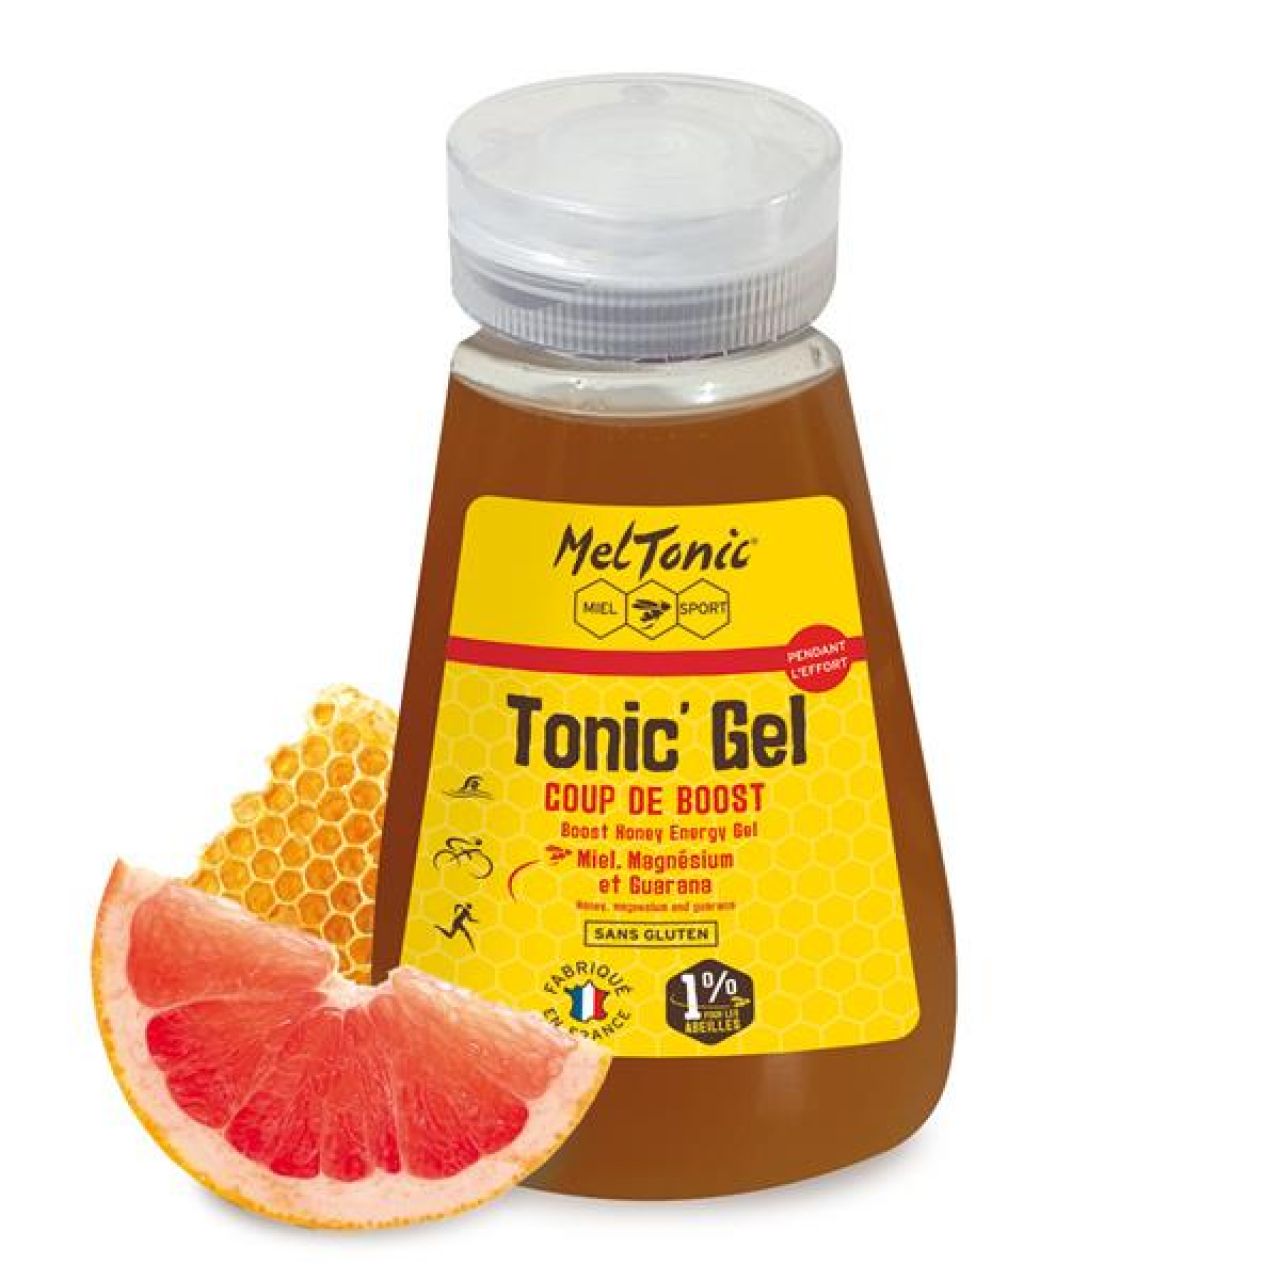 MELTONIC RECHARGE ECO GEL BIO COUP DE BOOST miel magnesium guarana